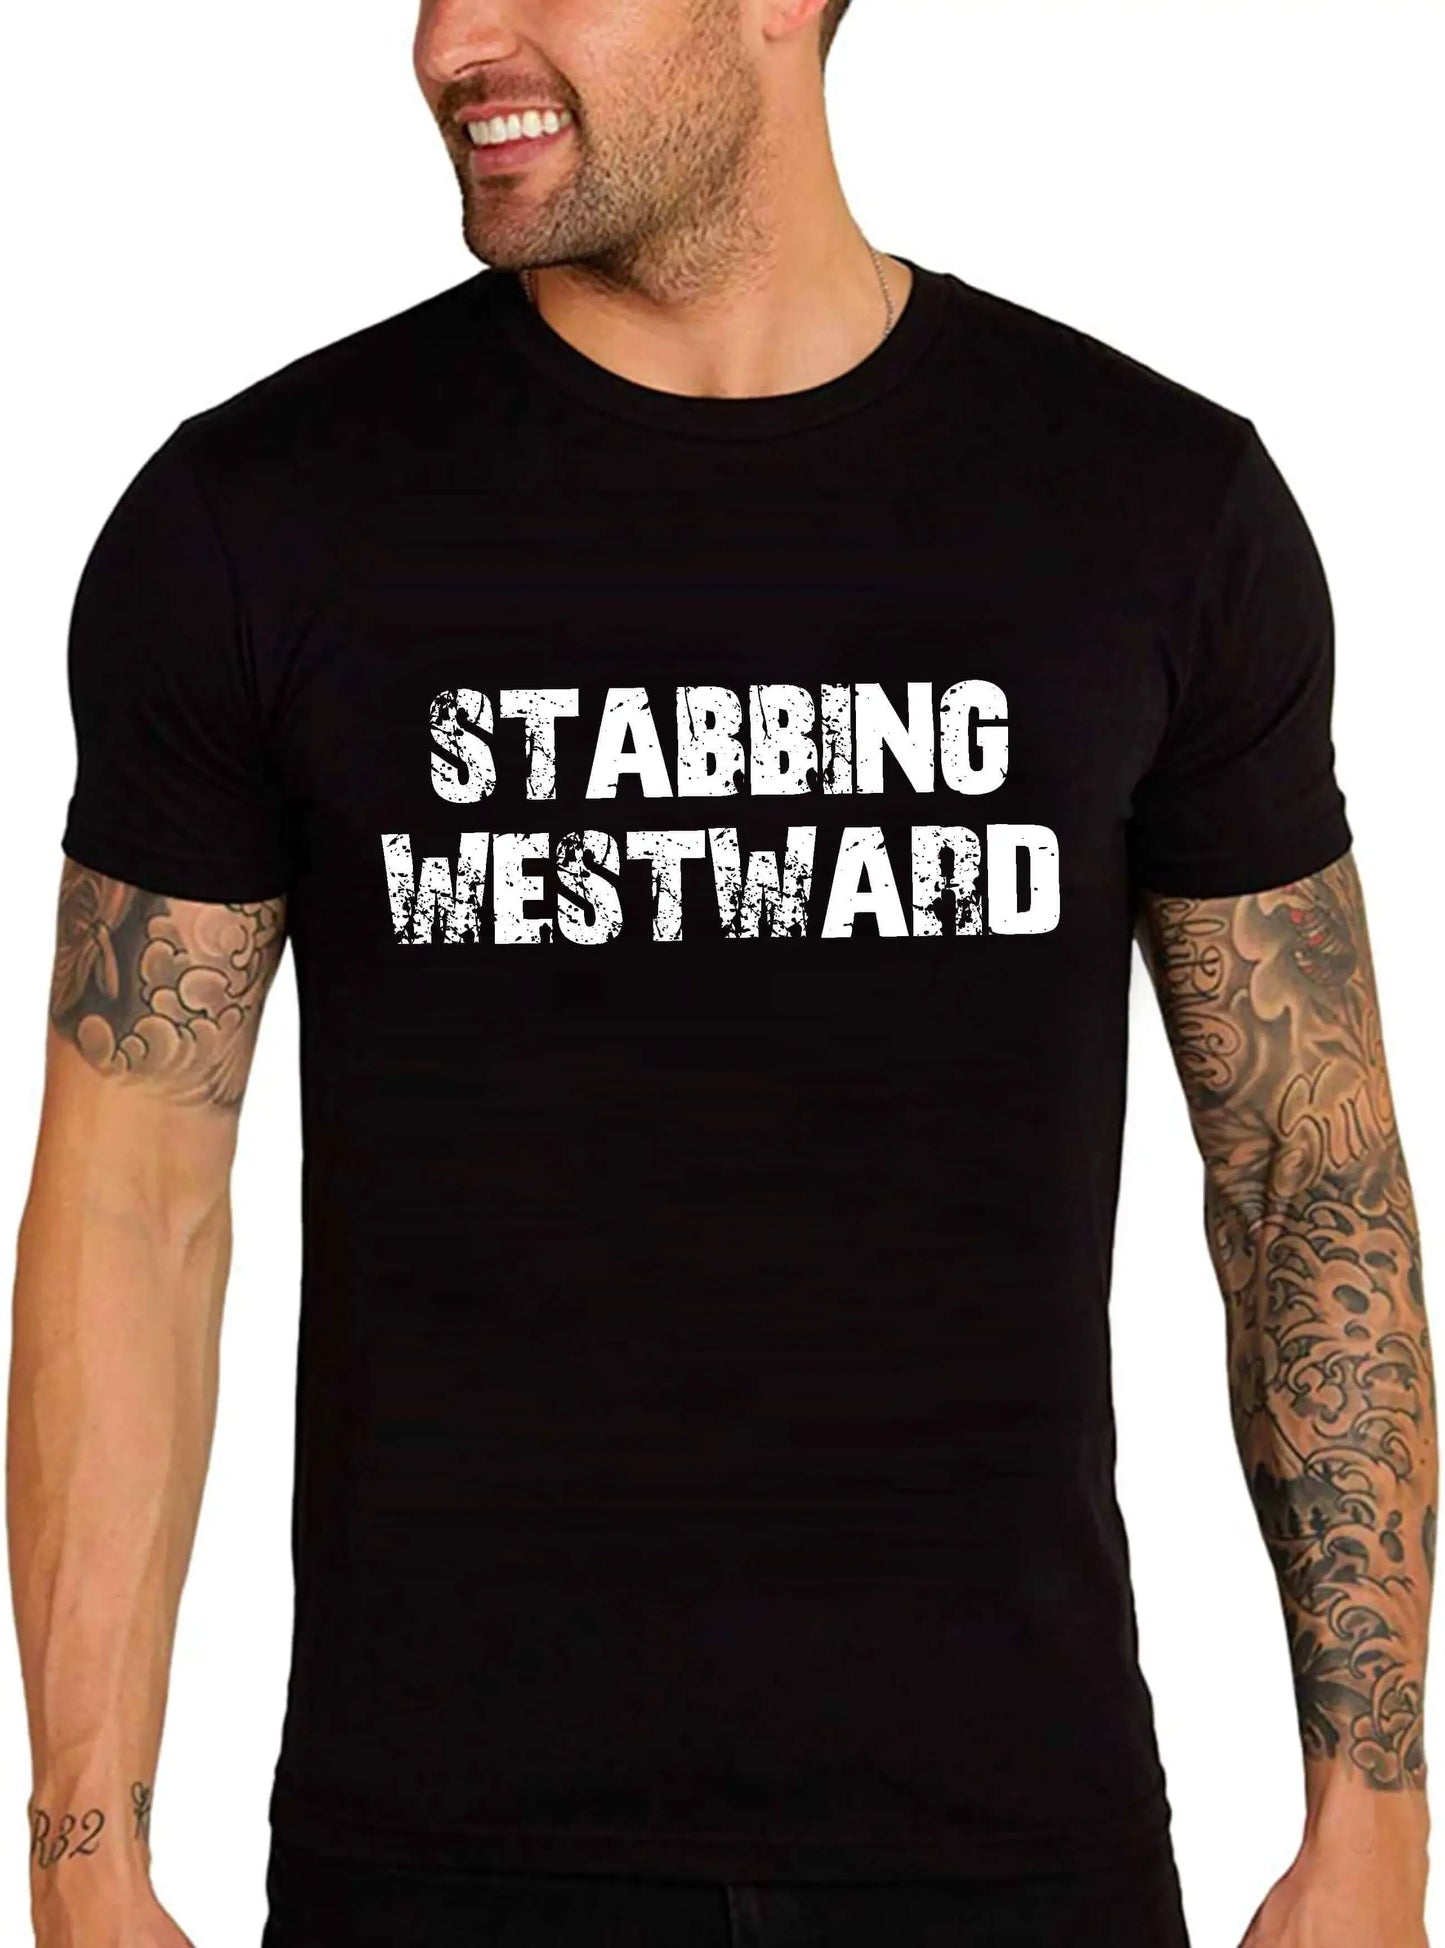 Men's Graphic T-Shirt Stabbing Westward Eco-Friendly Limited Edition Short Sleeve Tee-Shirt Vintage Birthday Gift Novelty